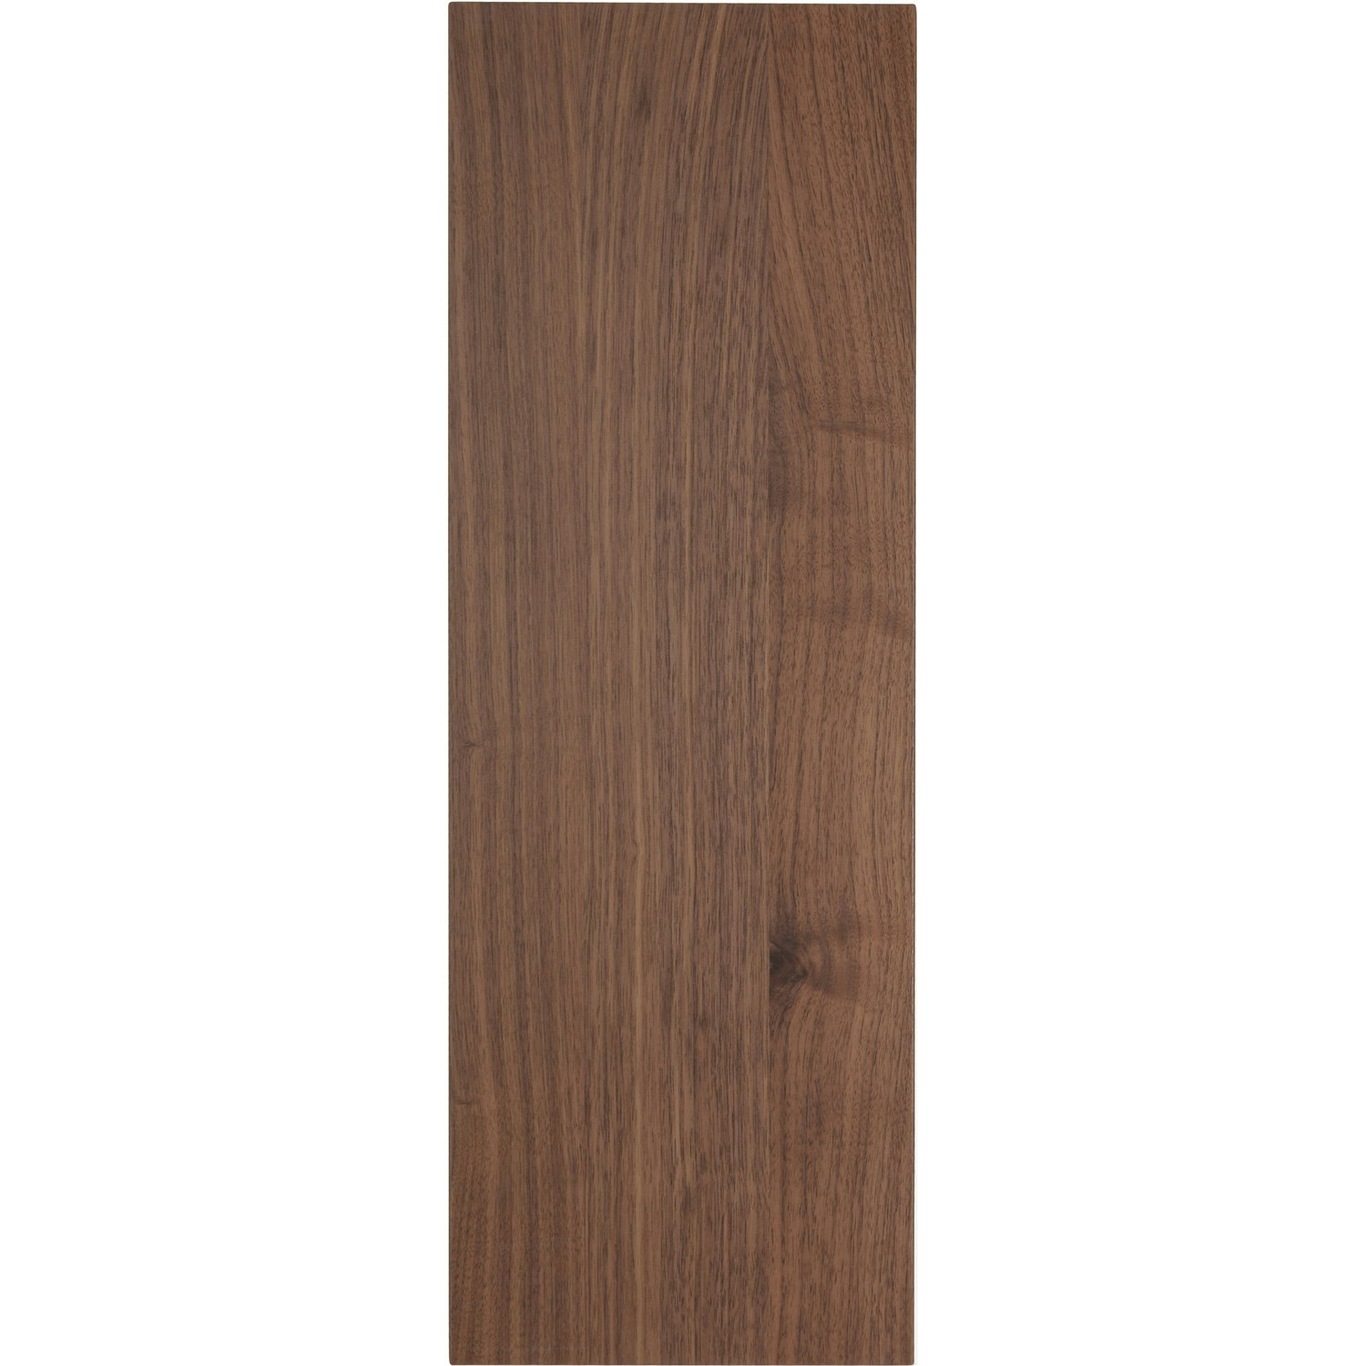 Pythagoras Plank 60 cm, Walnut